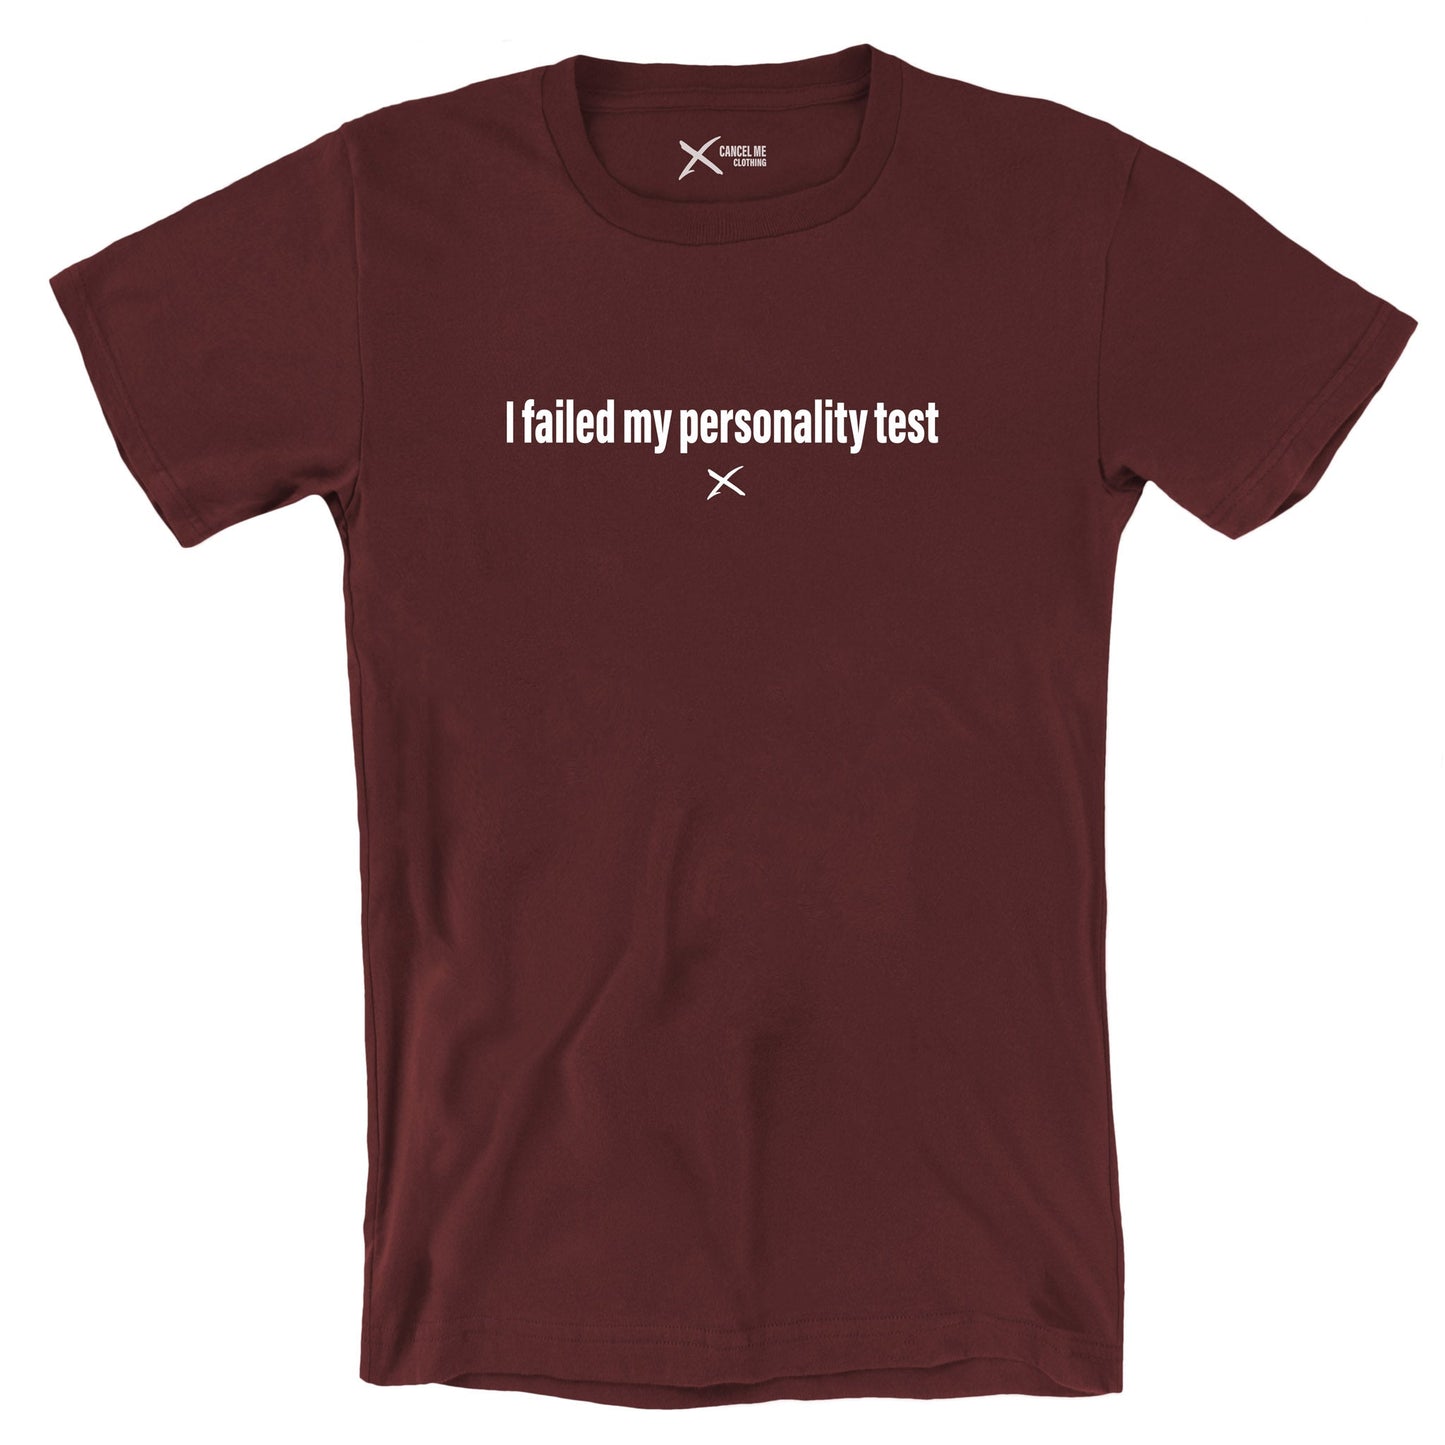 I failed my personality test - Shirt